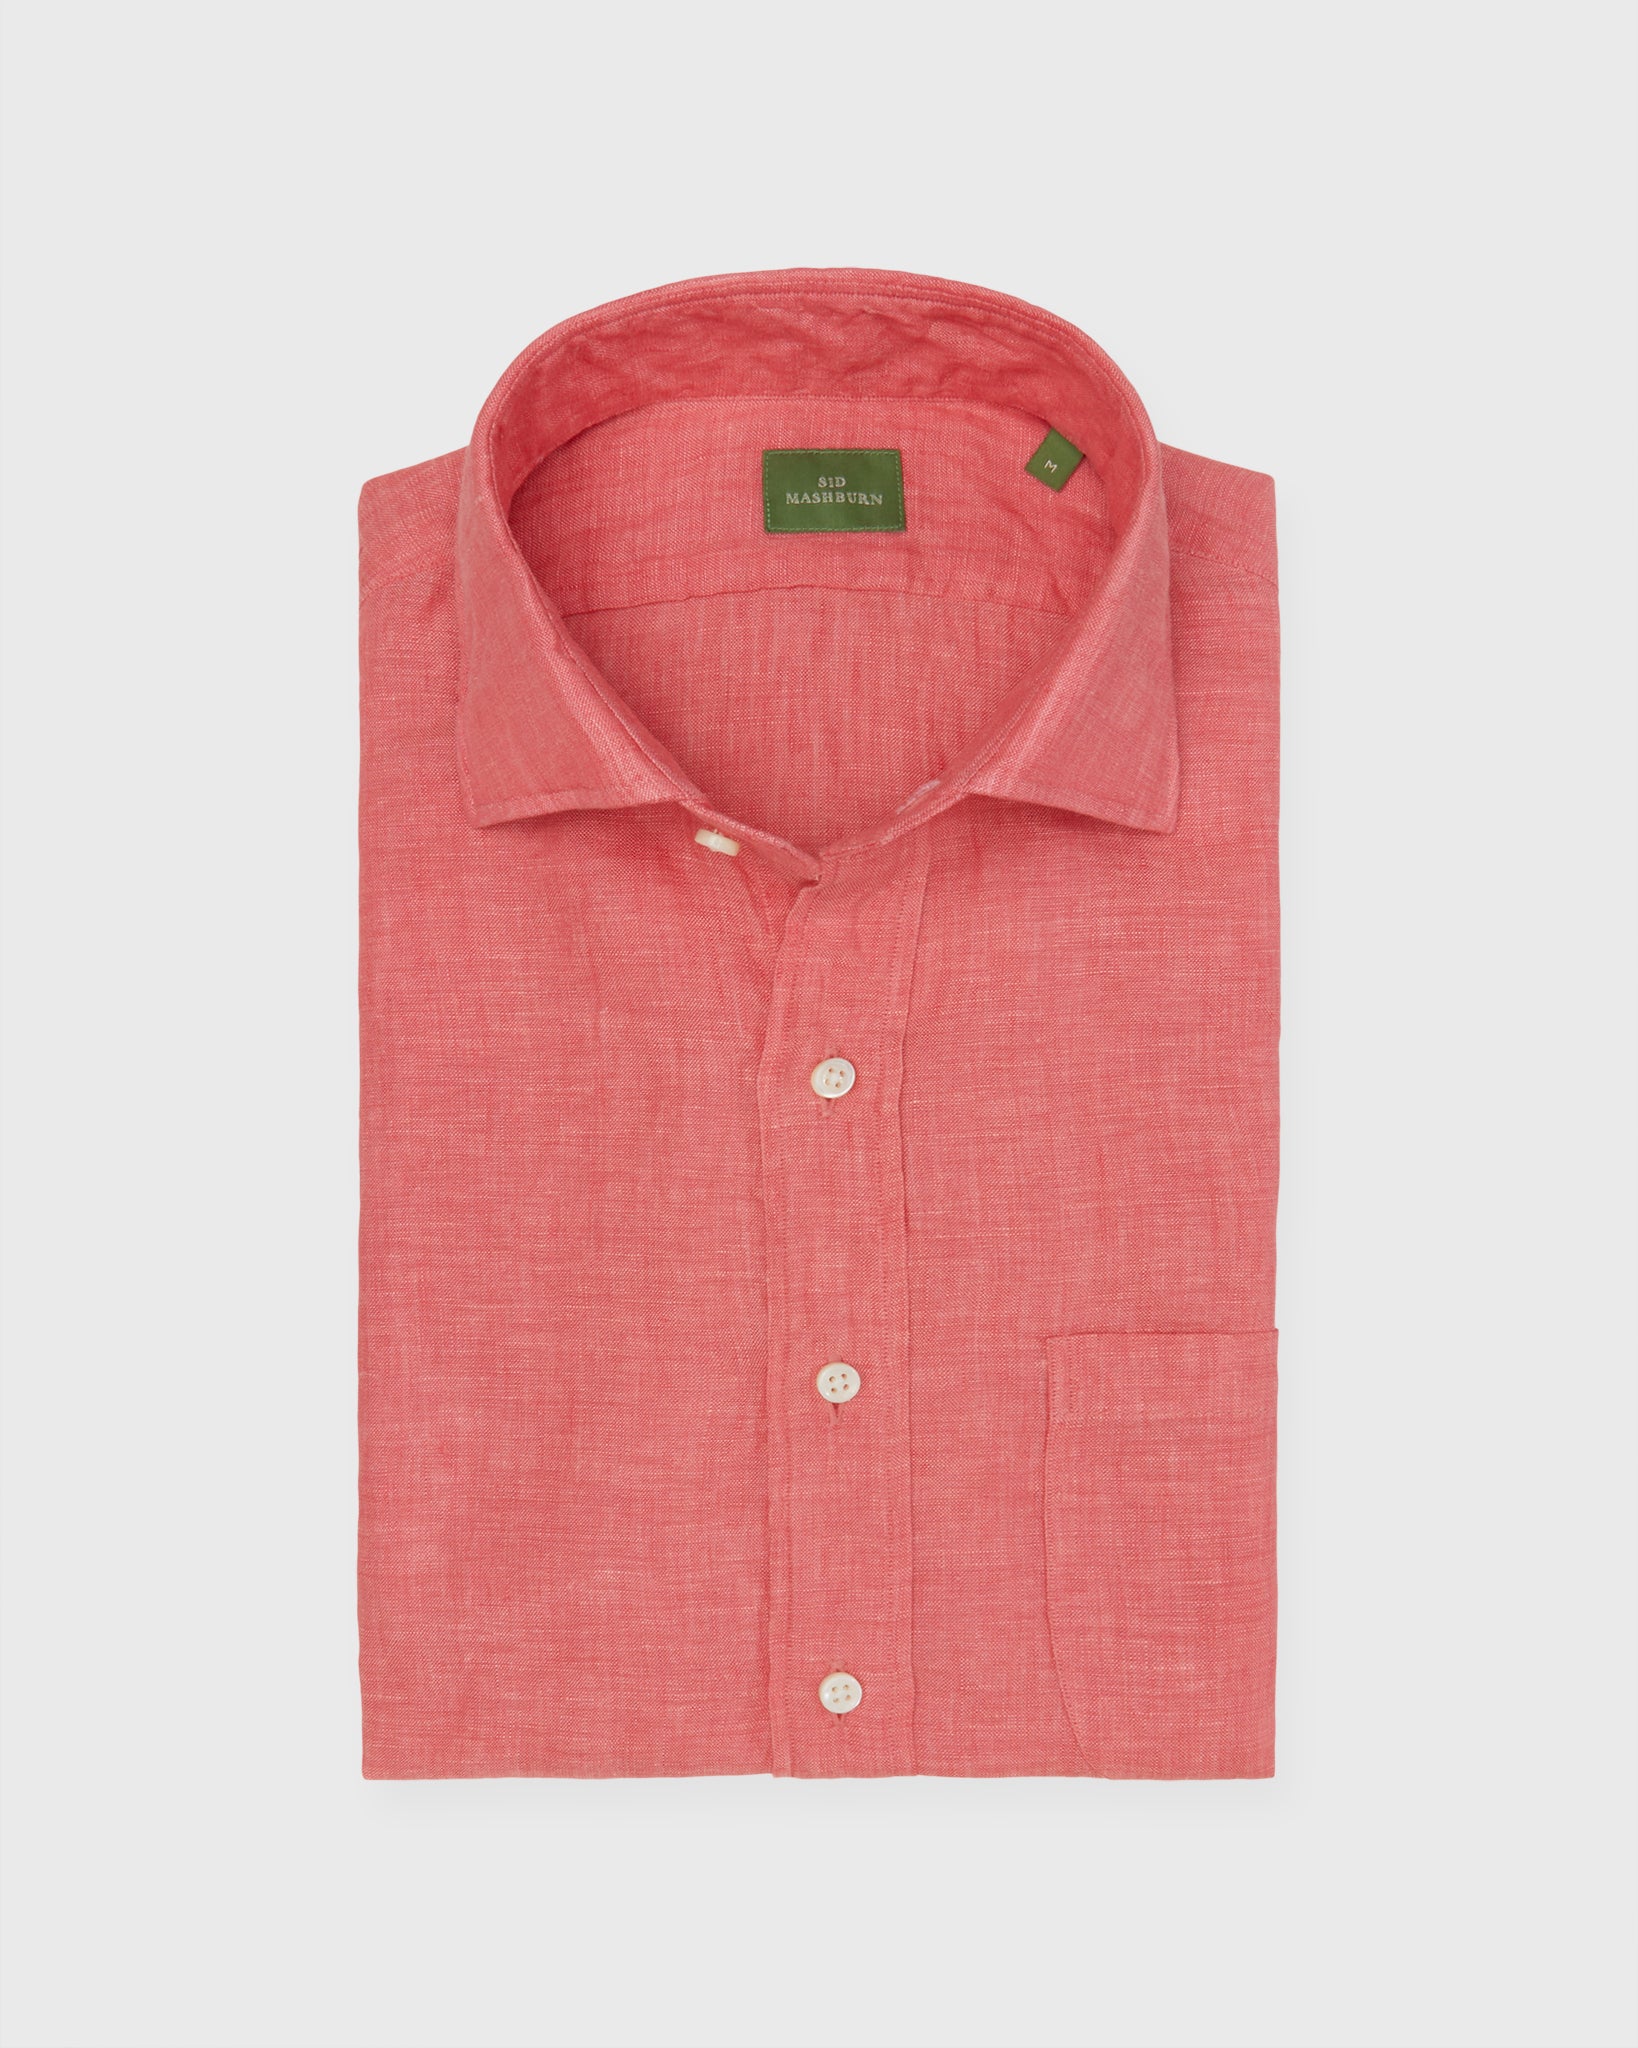 Spread Collar Sport Shirt in Poppy Linen